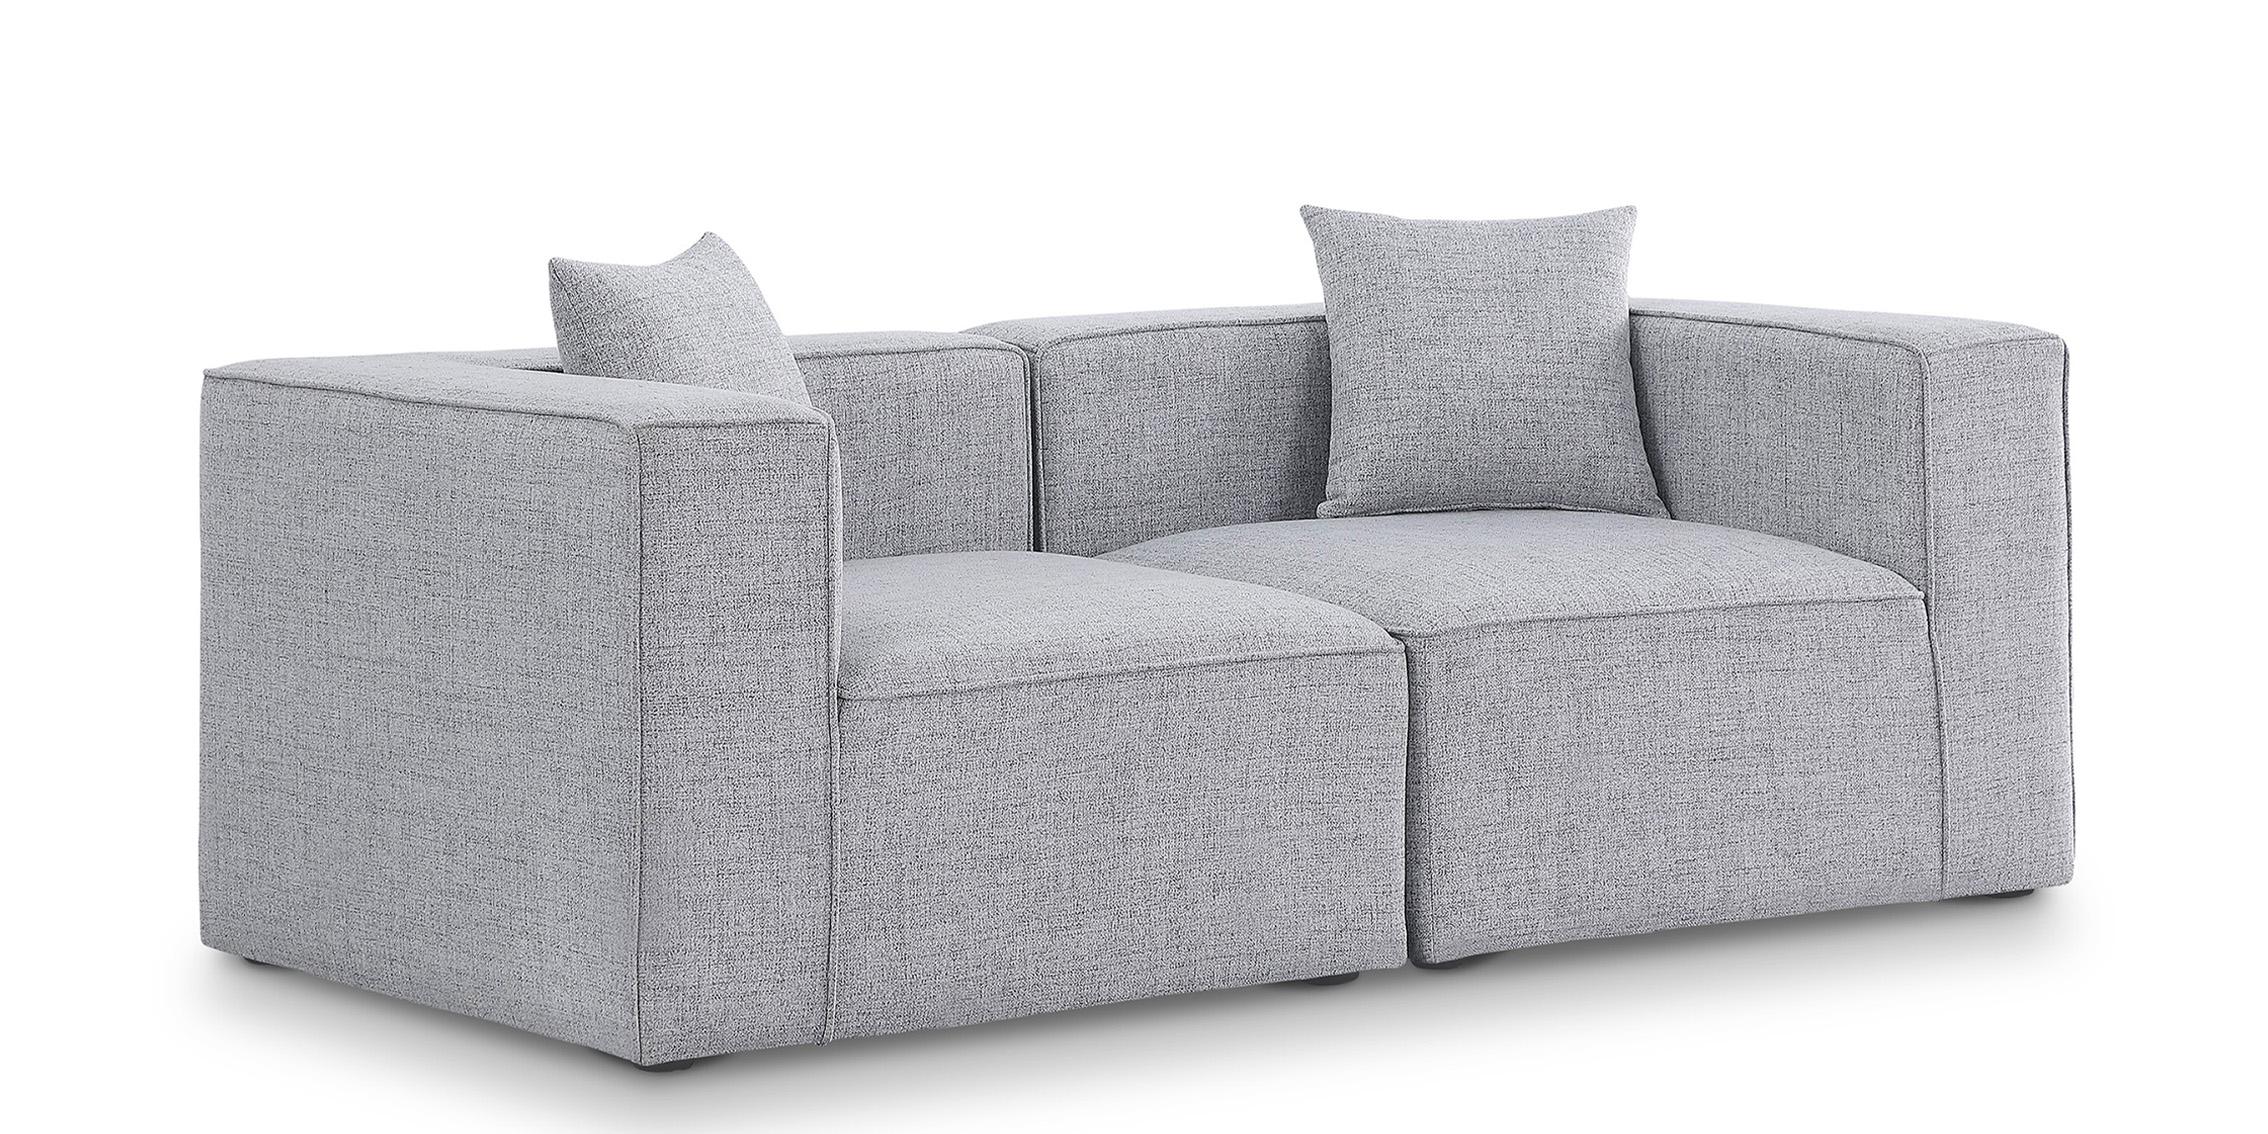 Contemporary, Modern Modular Sofa CUBE 630Grey-S72B 630Grey-S72B in Gray Linen